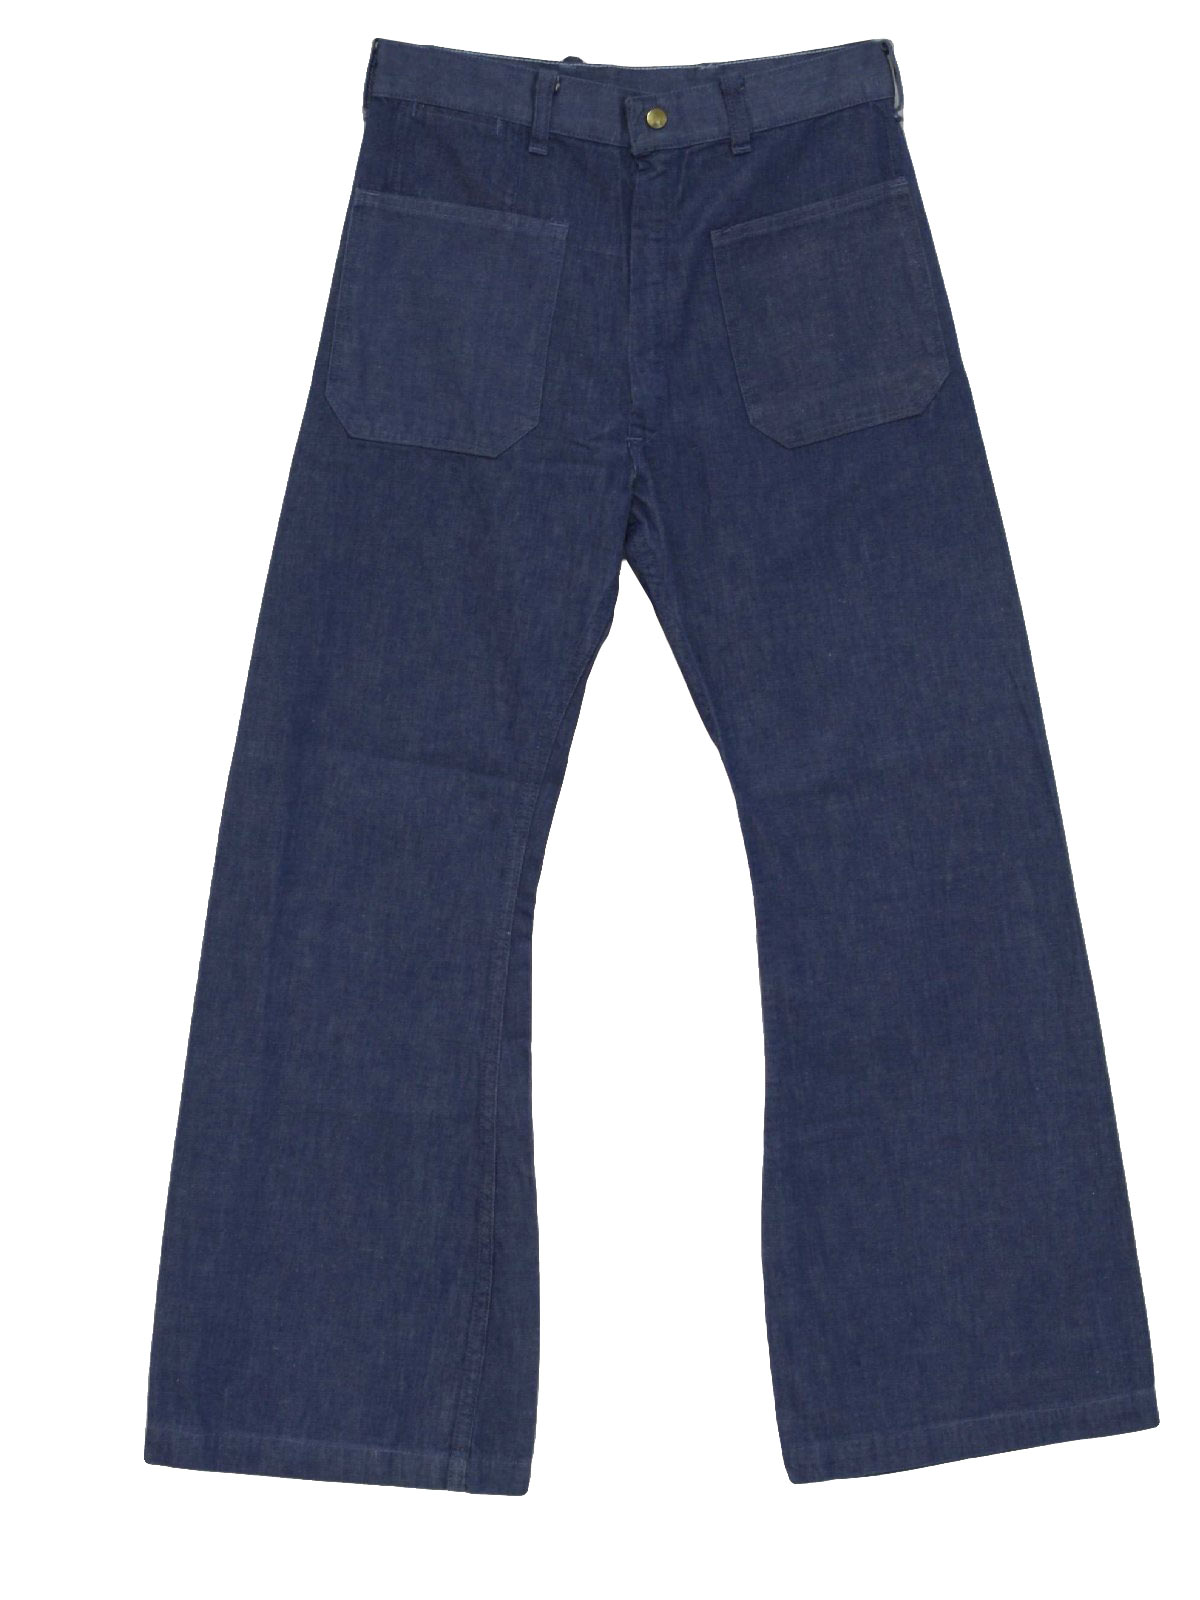 1960s Bellbottom Pants: 60s -No Label- Womens cotton bellbottom jeans ...